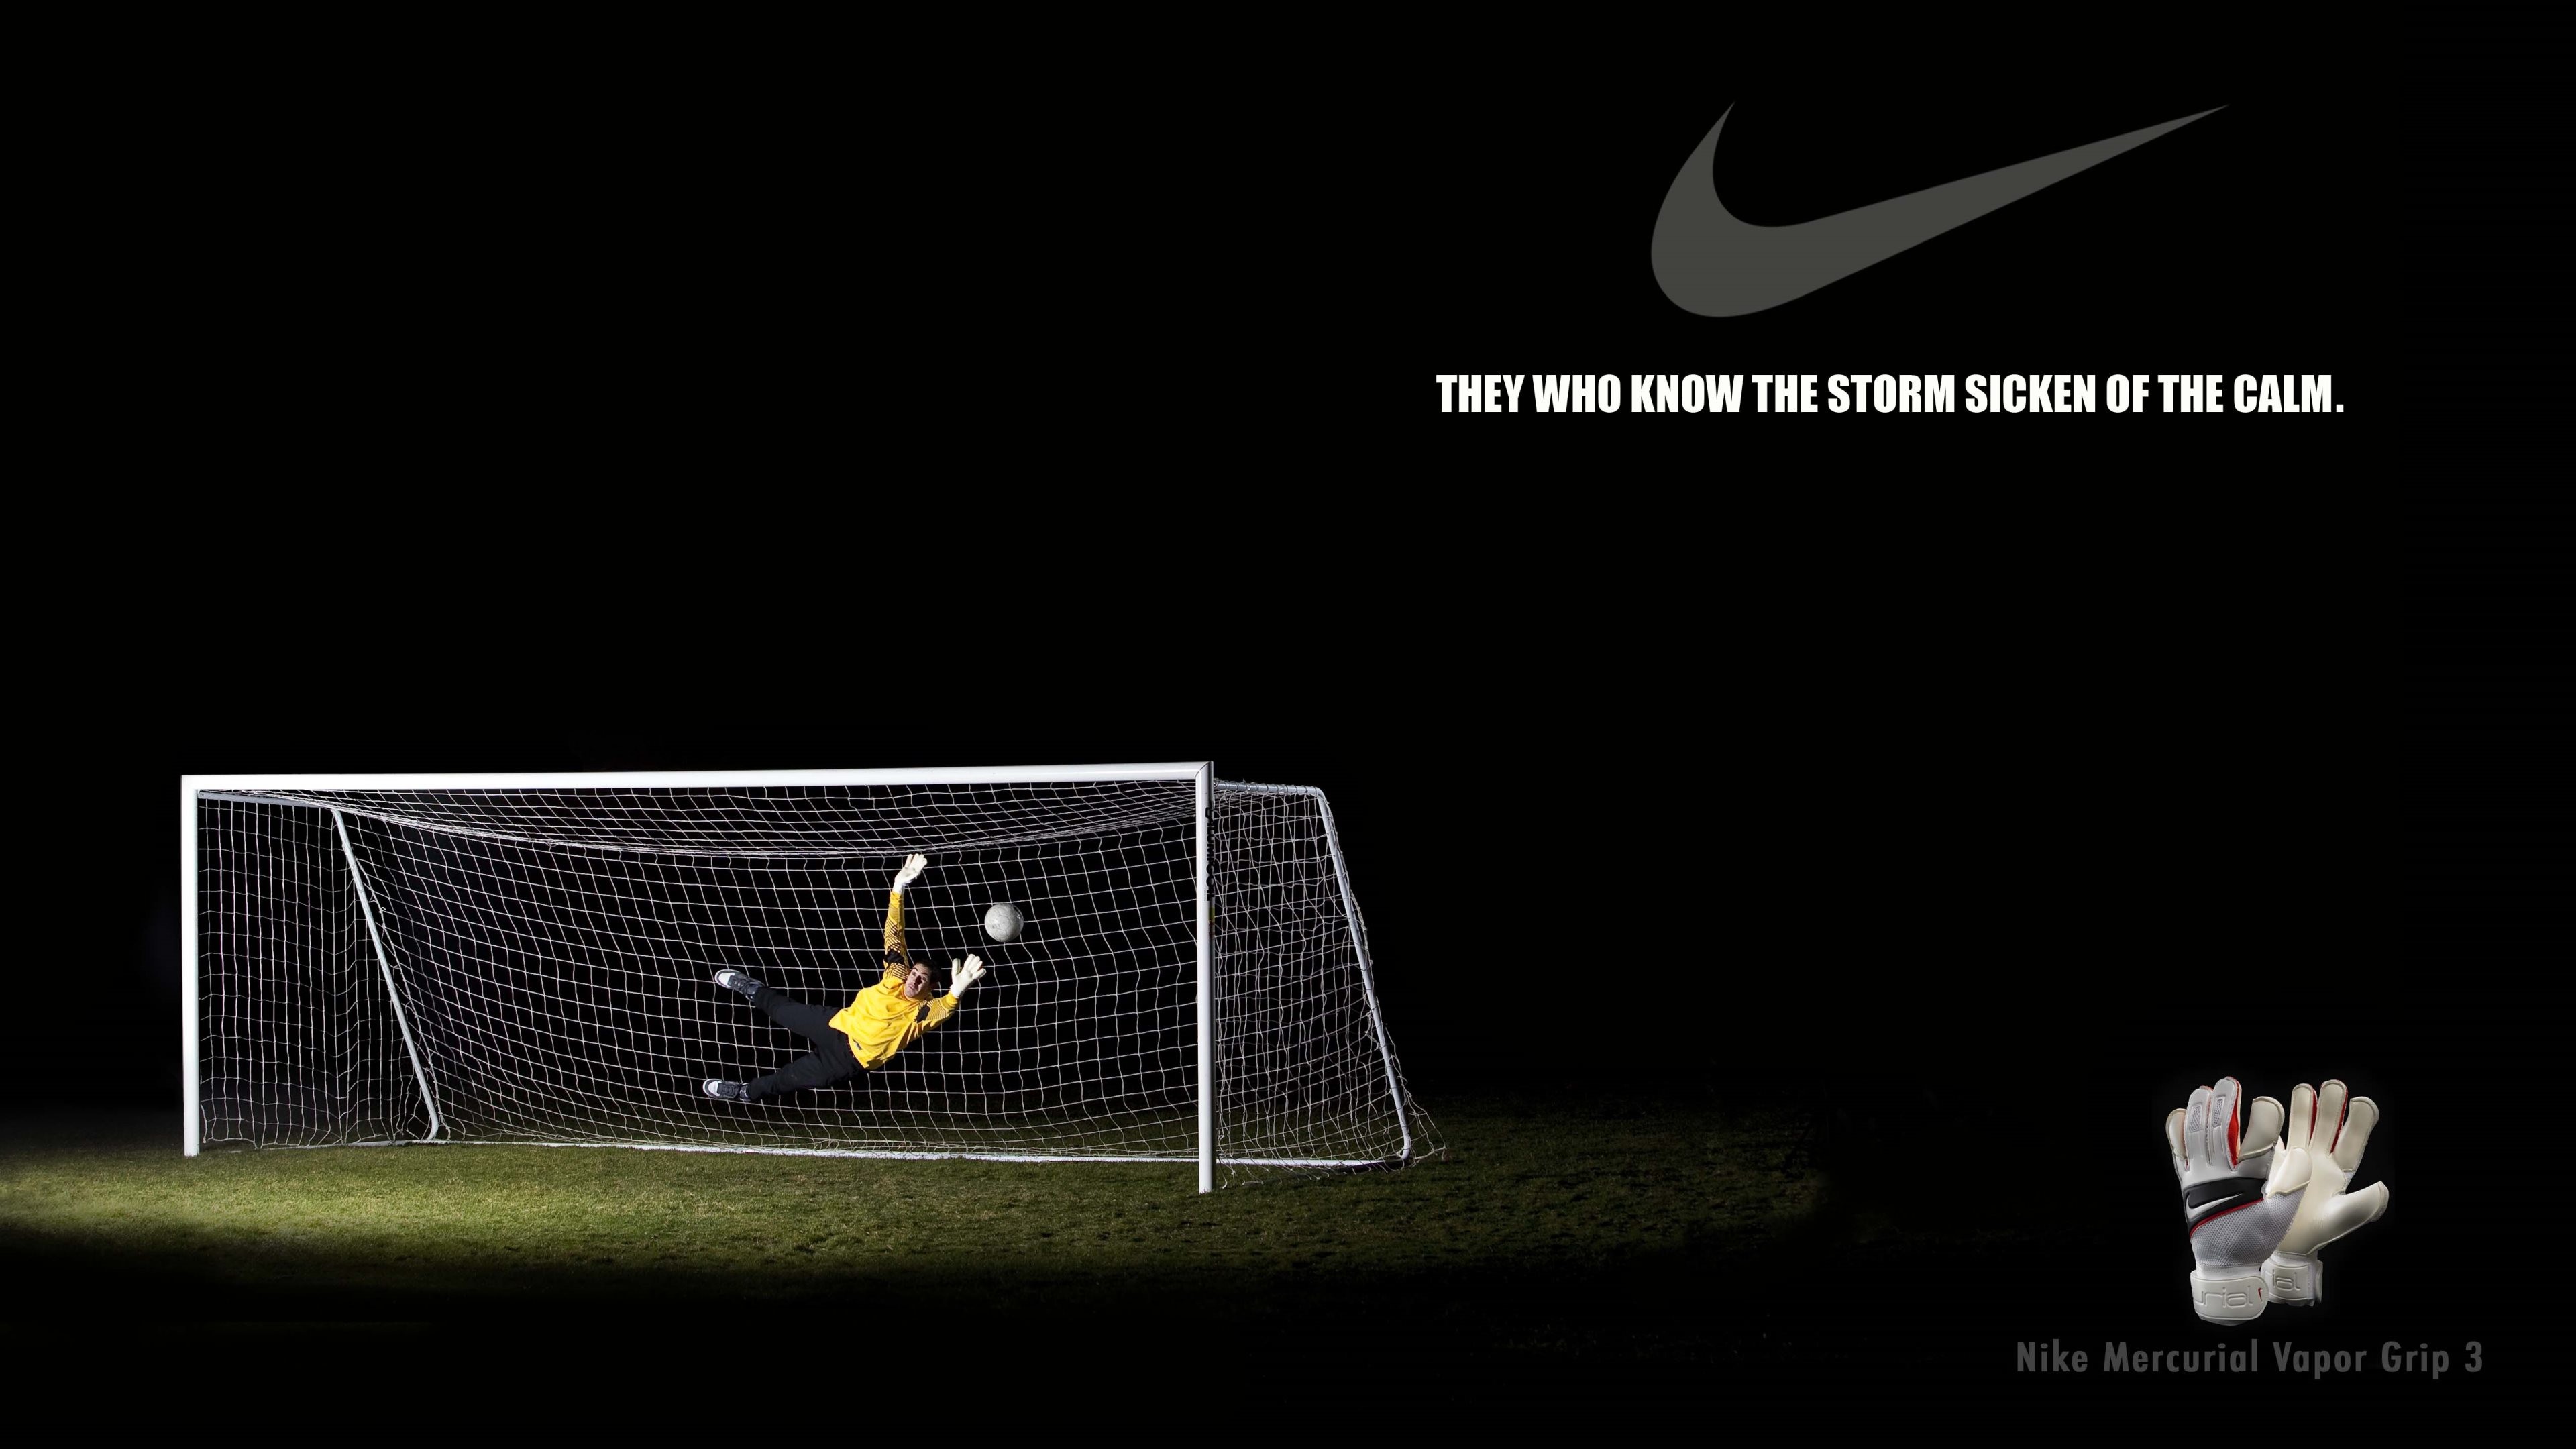 3840x2160 Wallpaper: Nike Creative Soccer Poster. Ultra HD 4K 